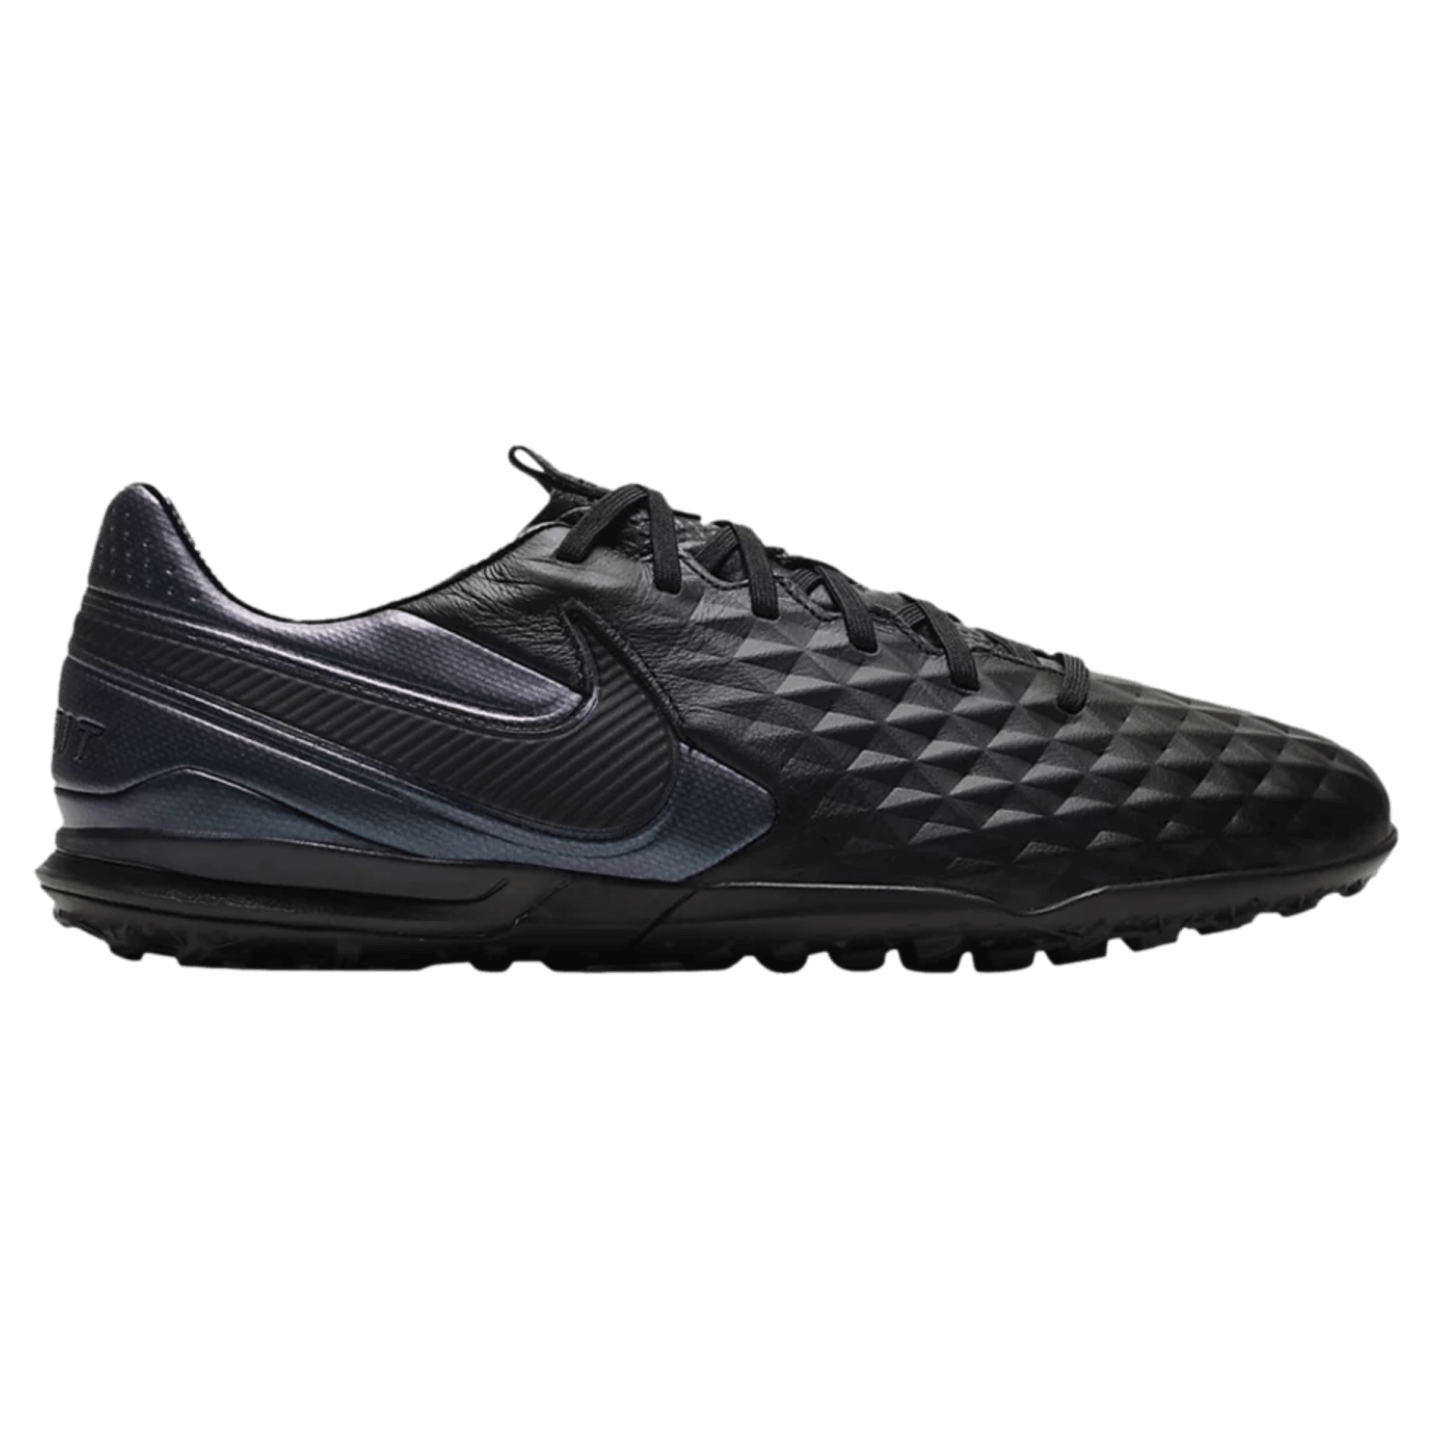 Nike Legend 8 Pro Turf Soccer Shoes